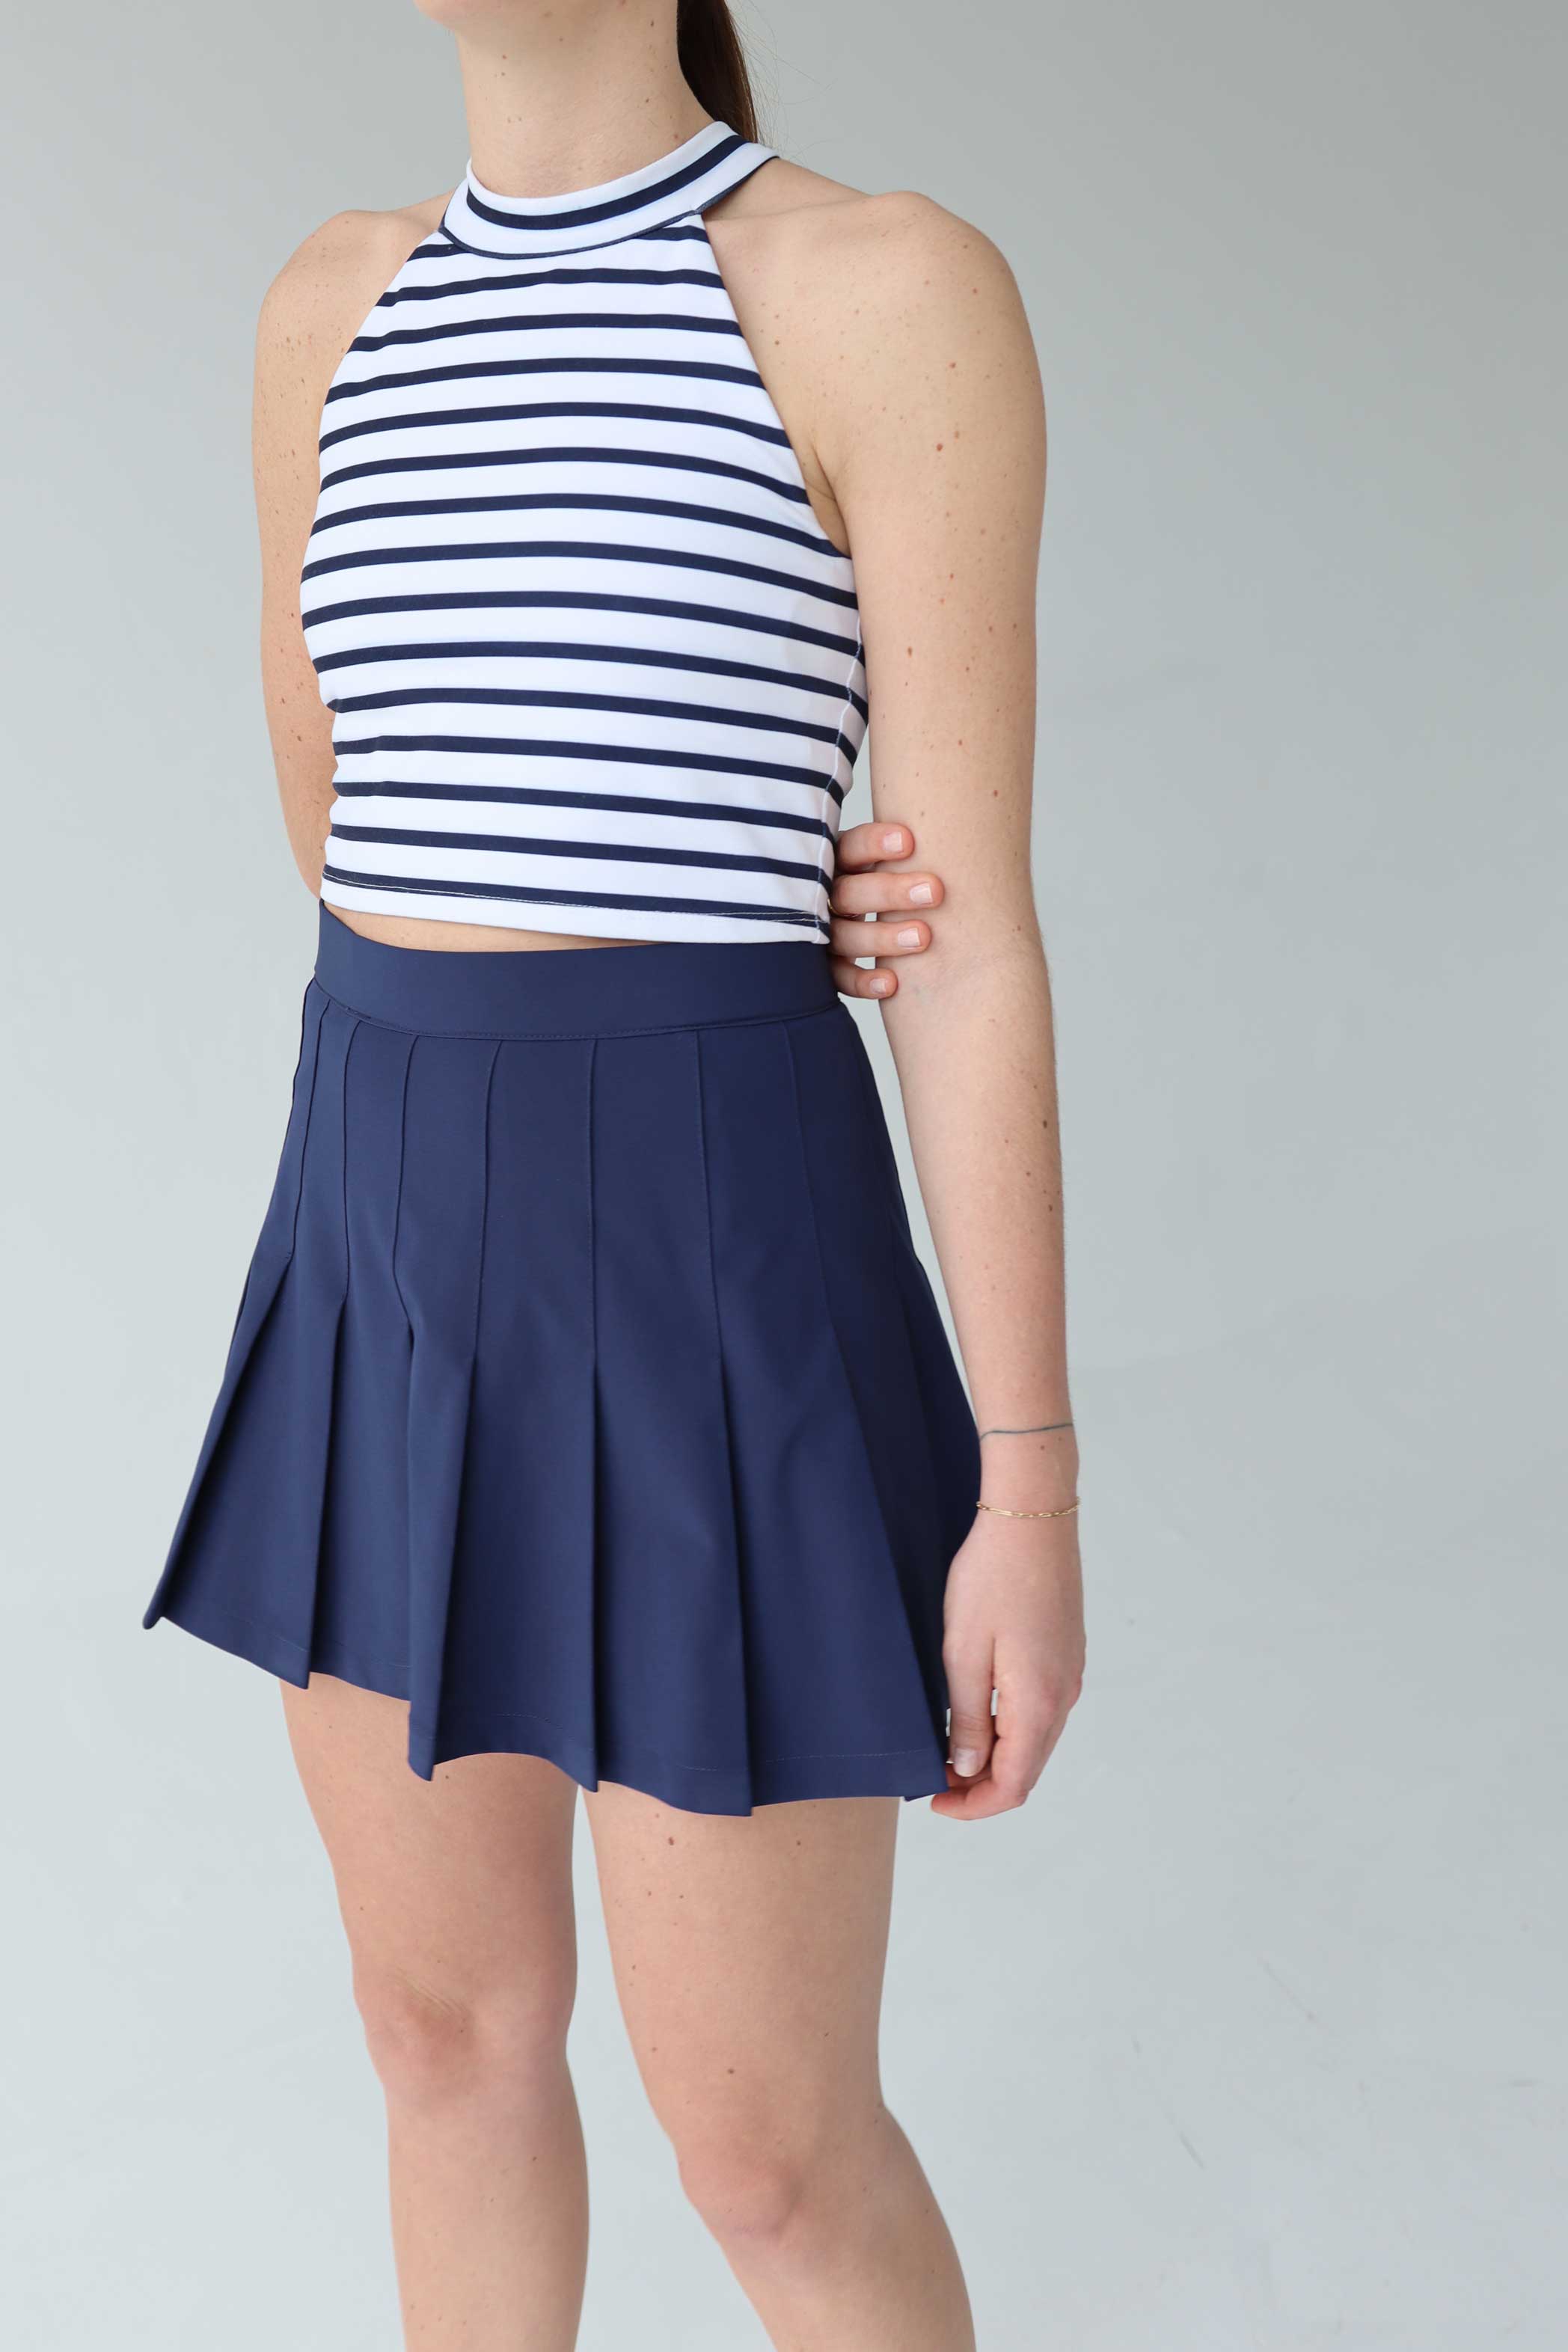 Tennis Skirt - Navy